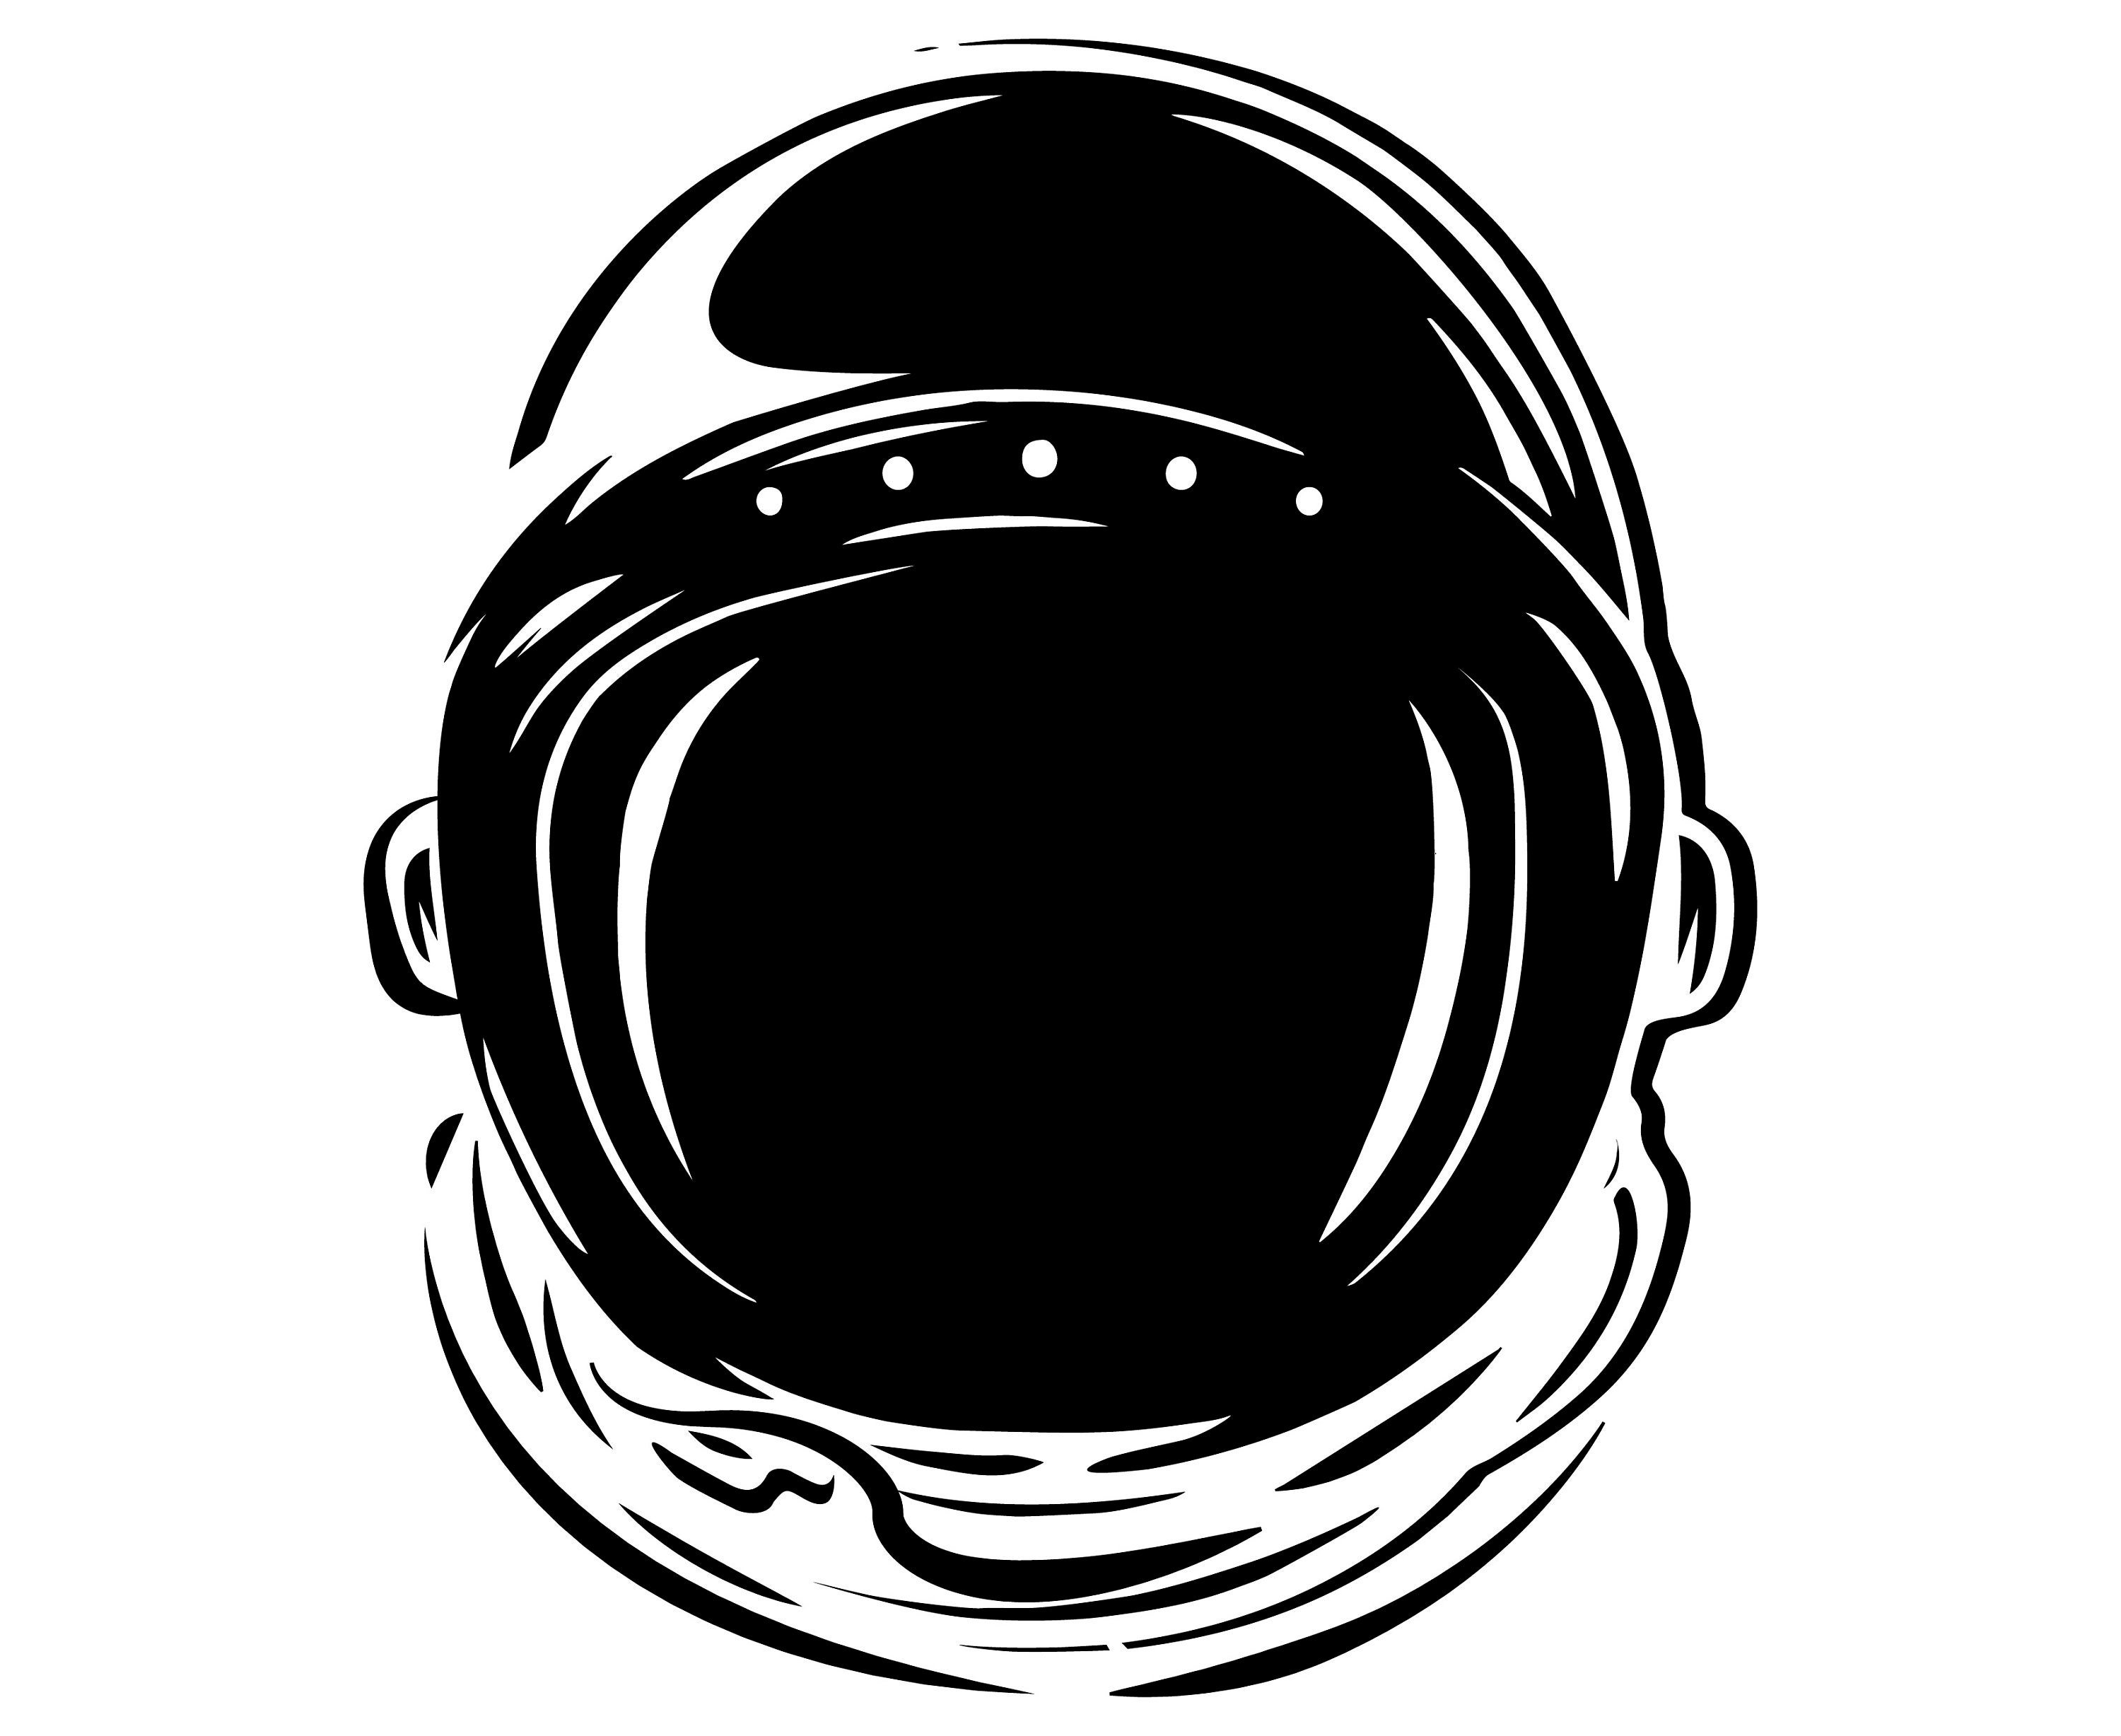 Шаблон шлема космонавта для фотосессии. Шлем Космонавта. Шлем скафандра. Космический шлем для фотошопа. Шлем скафандра Космонавта.